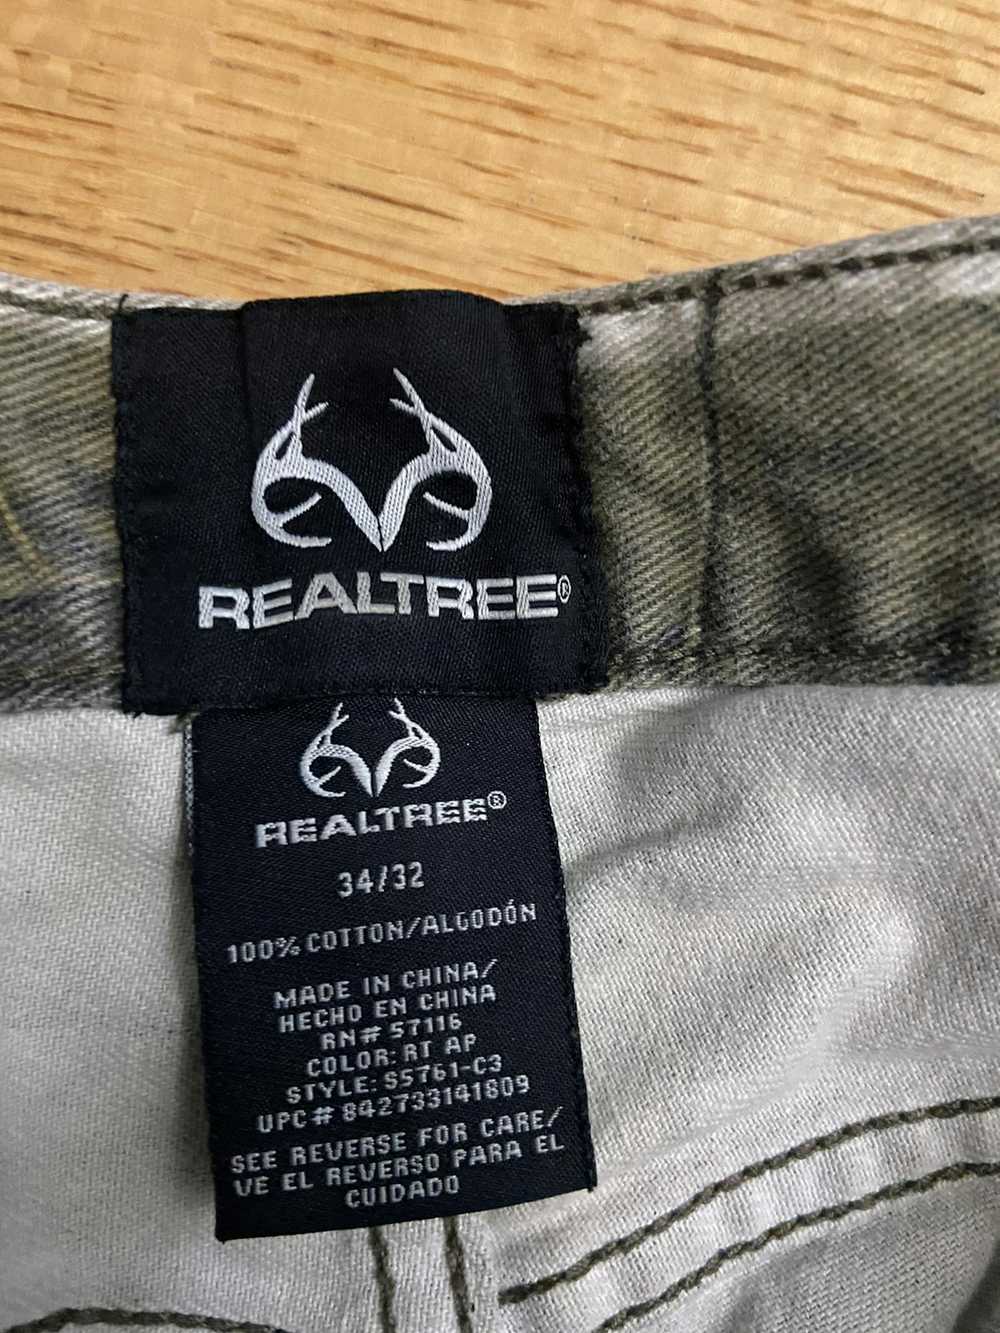 Realtree Real tree camo pants - image 3